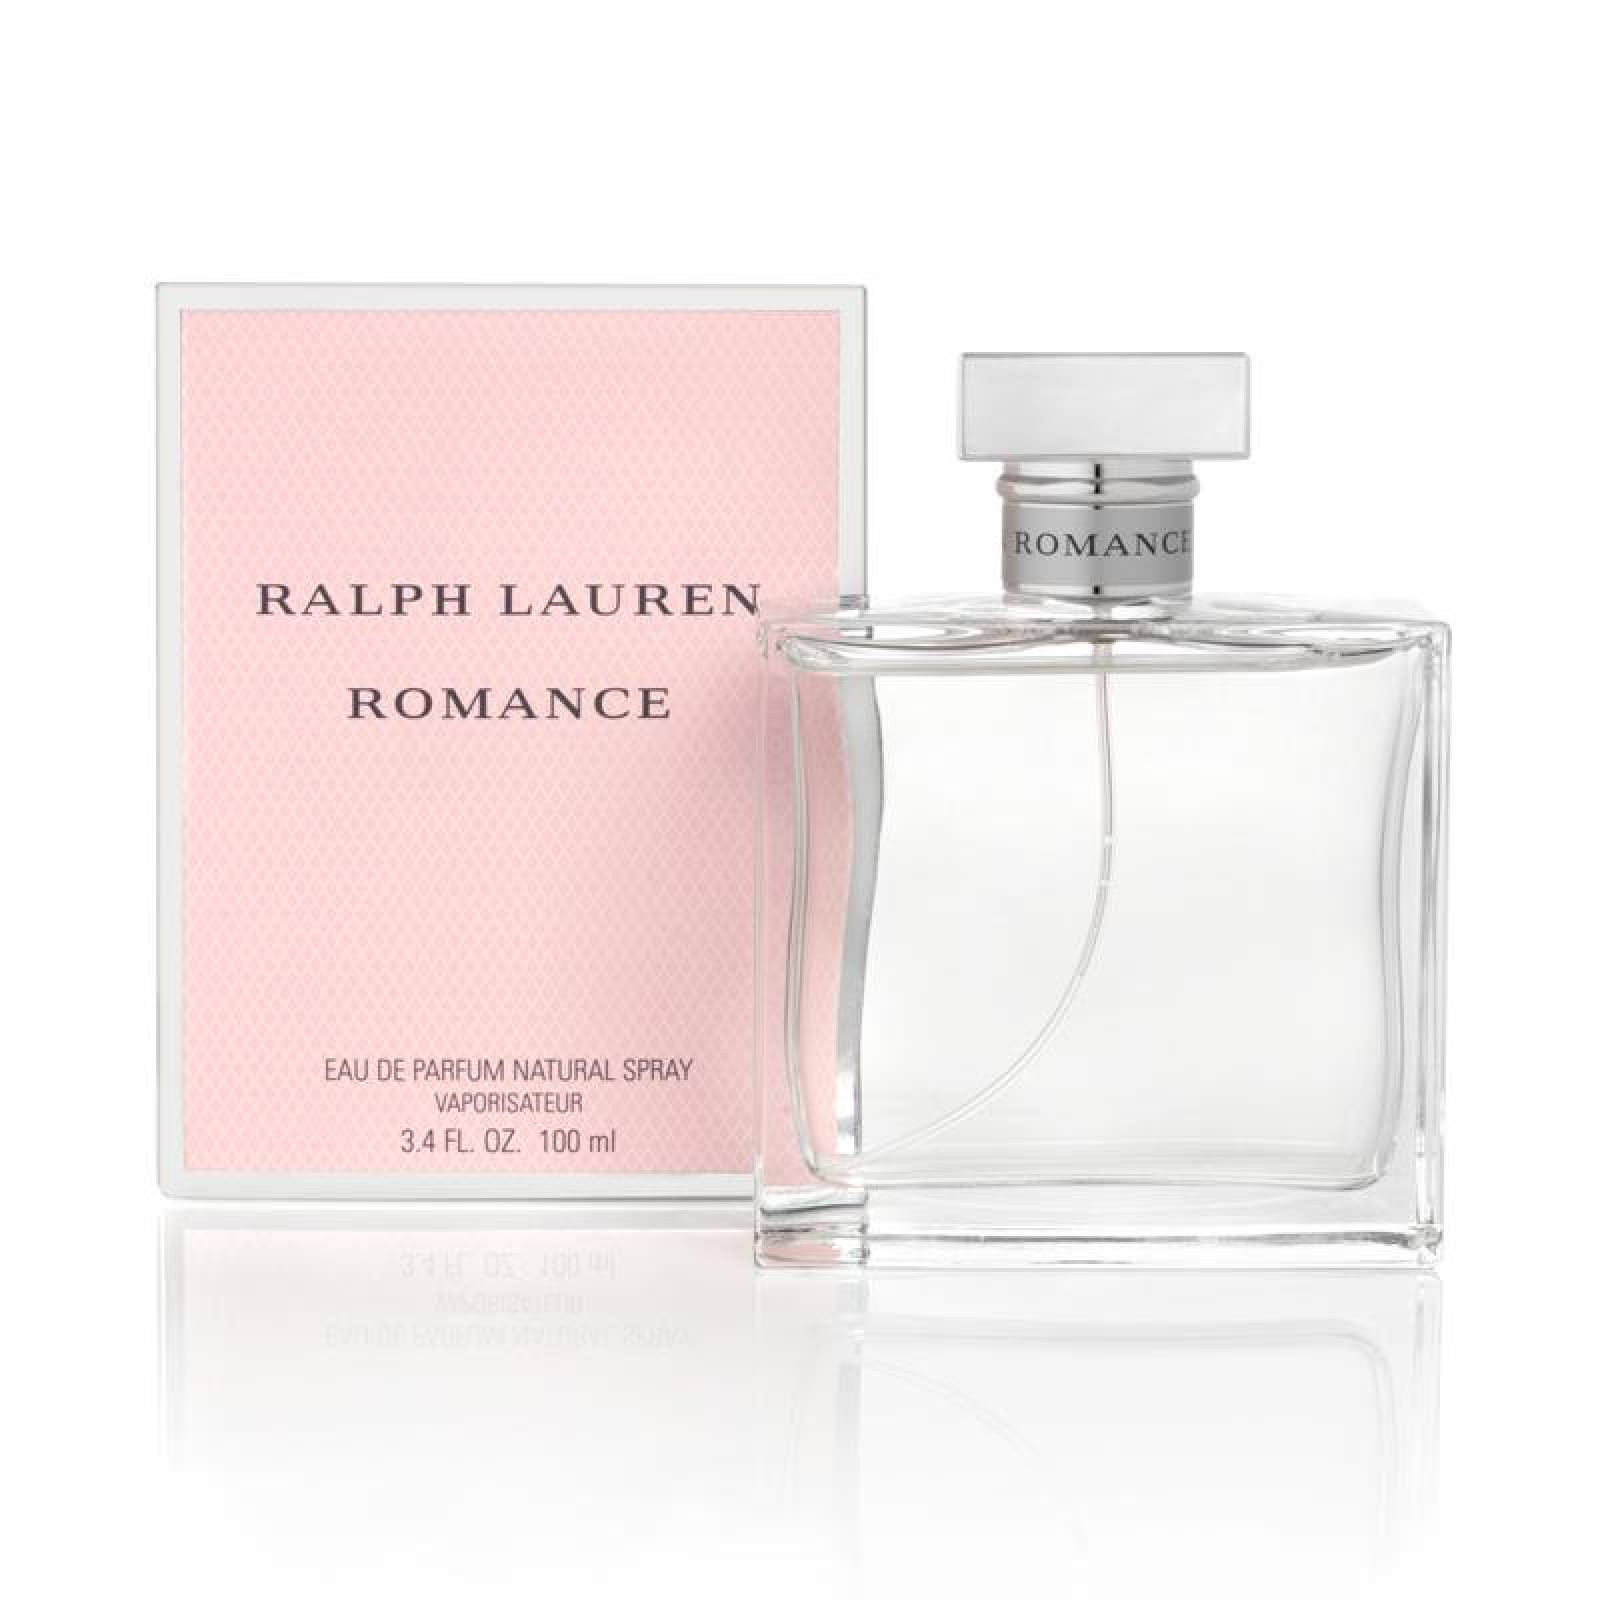 Romance de Ralph Lauren Eau de Parfum 100 ml. Fragancia para Dama